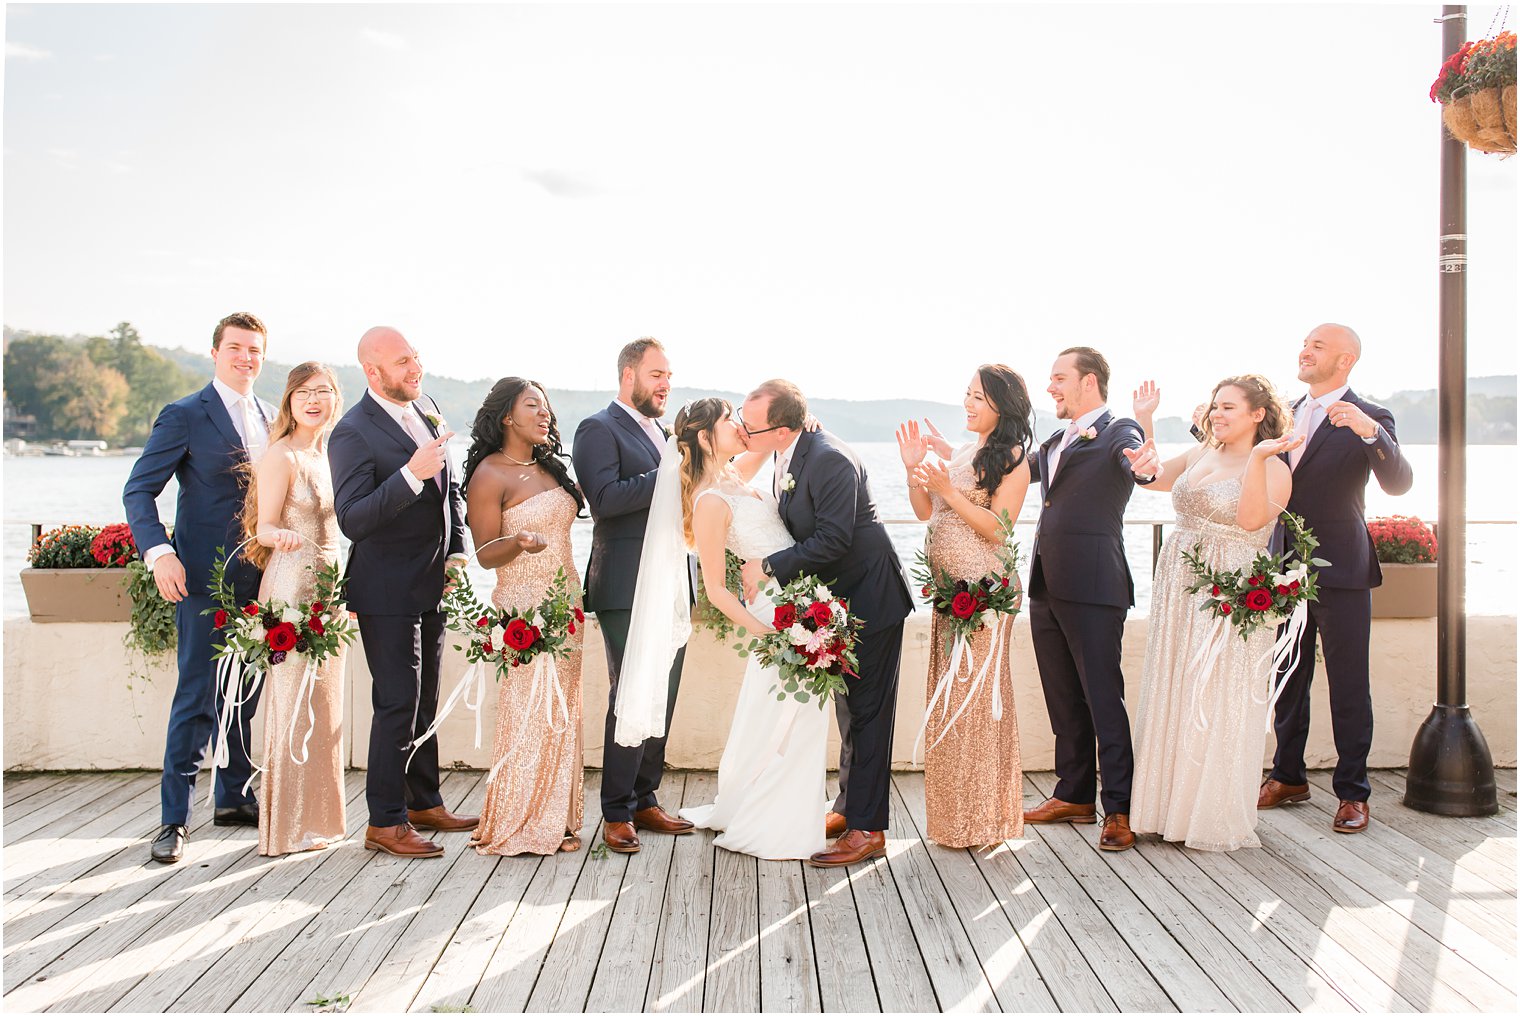 fun bridal party portraits at Lake Mohawk by Idalia Photography